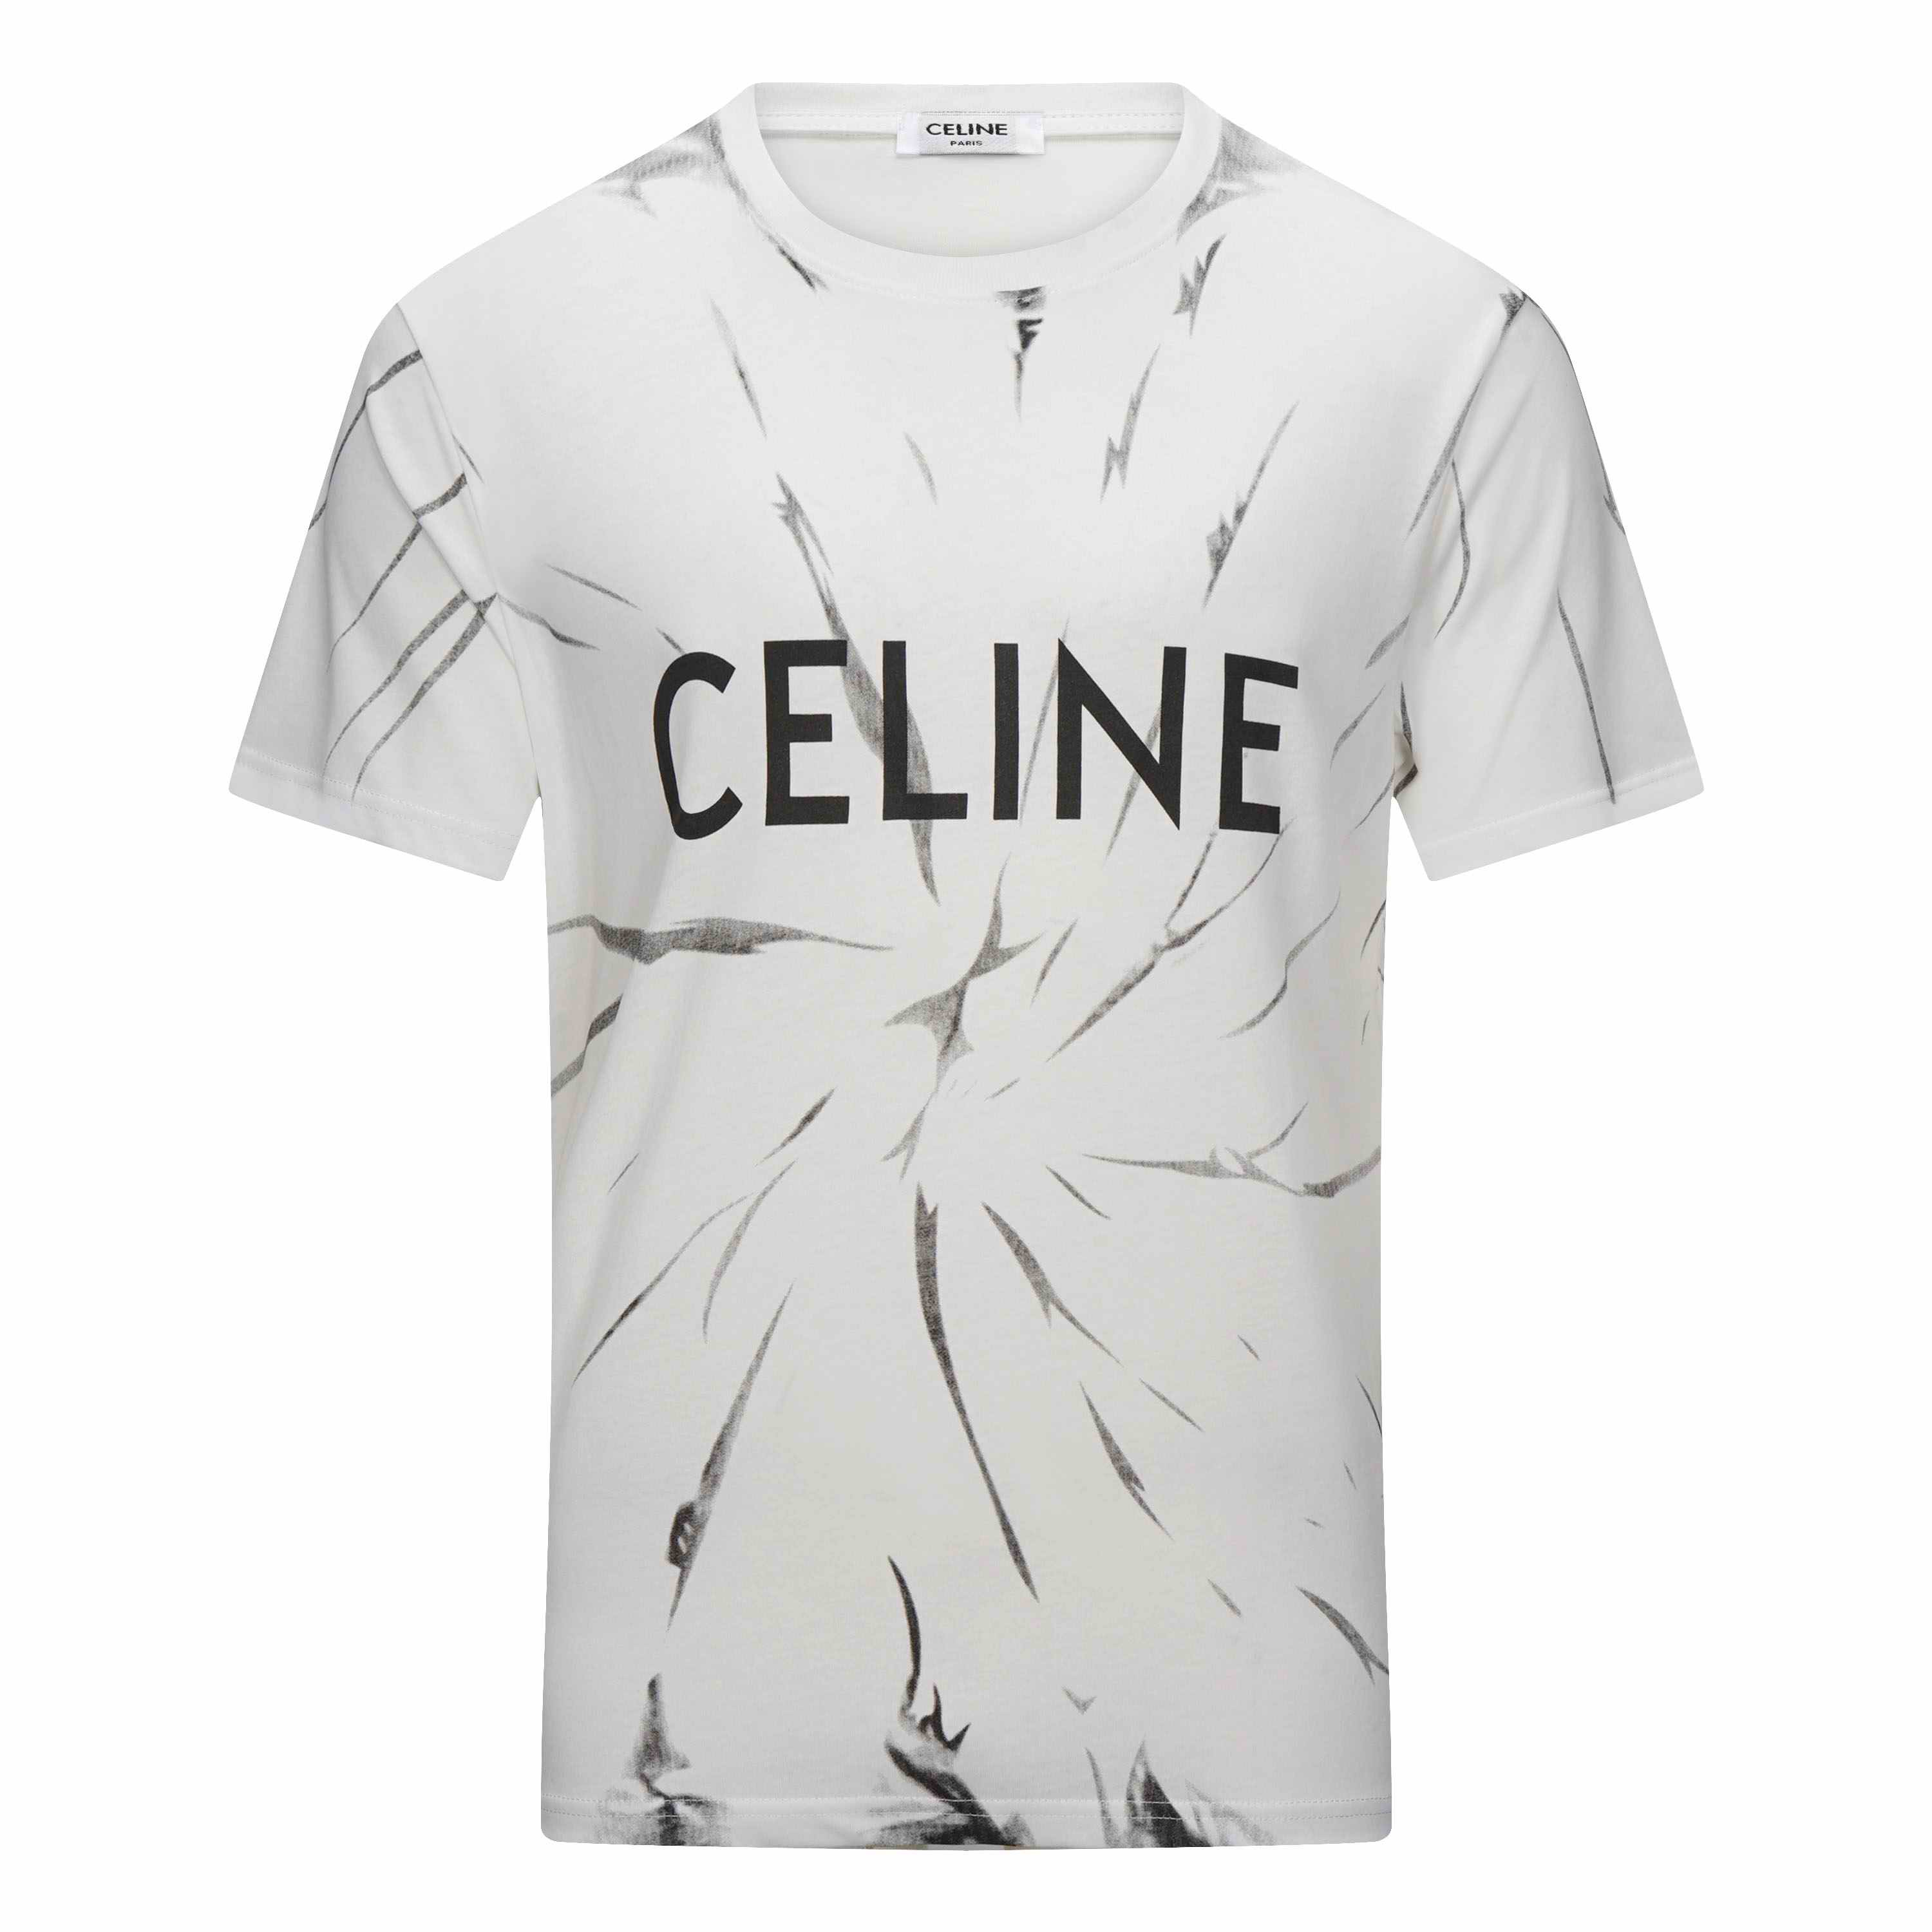  Celine Shirts 005